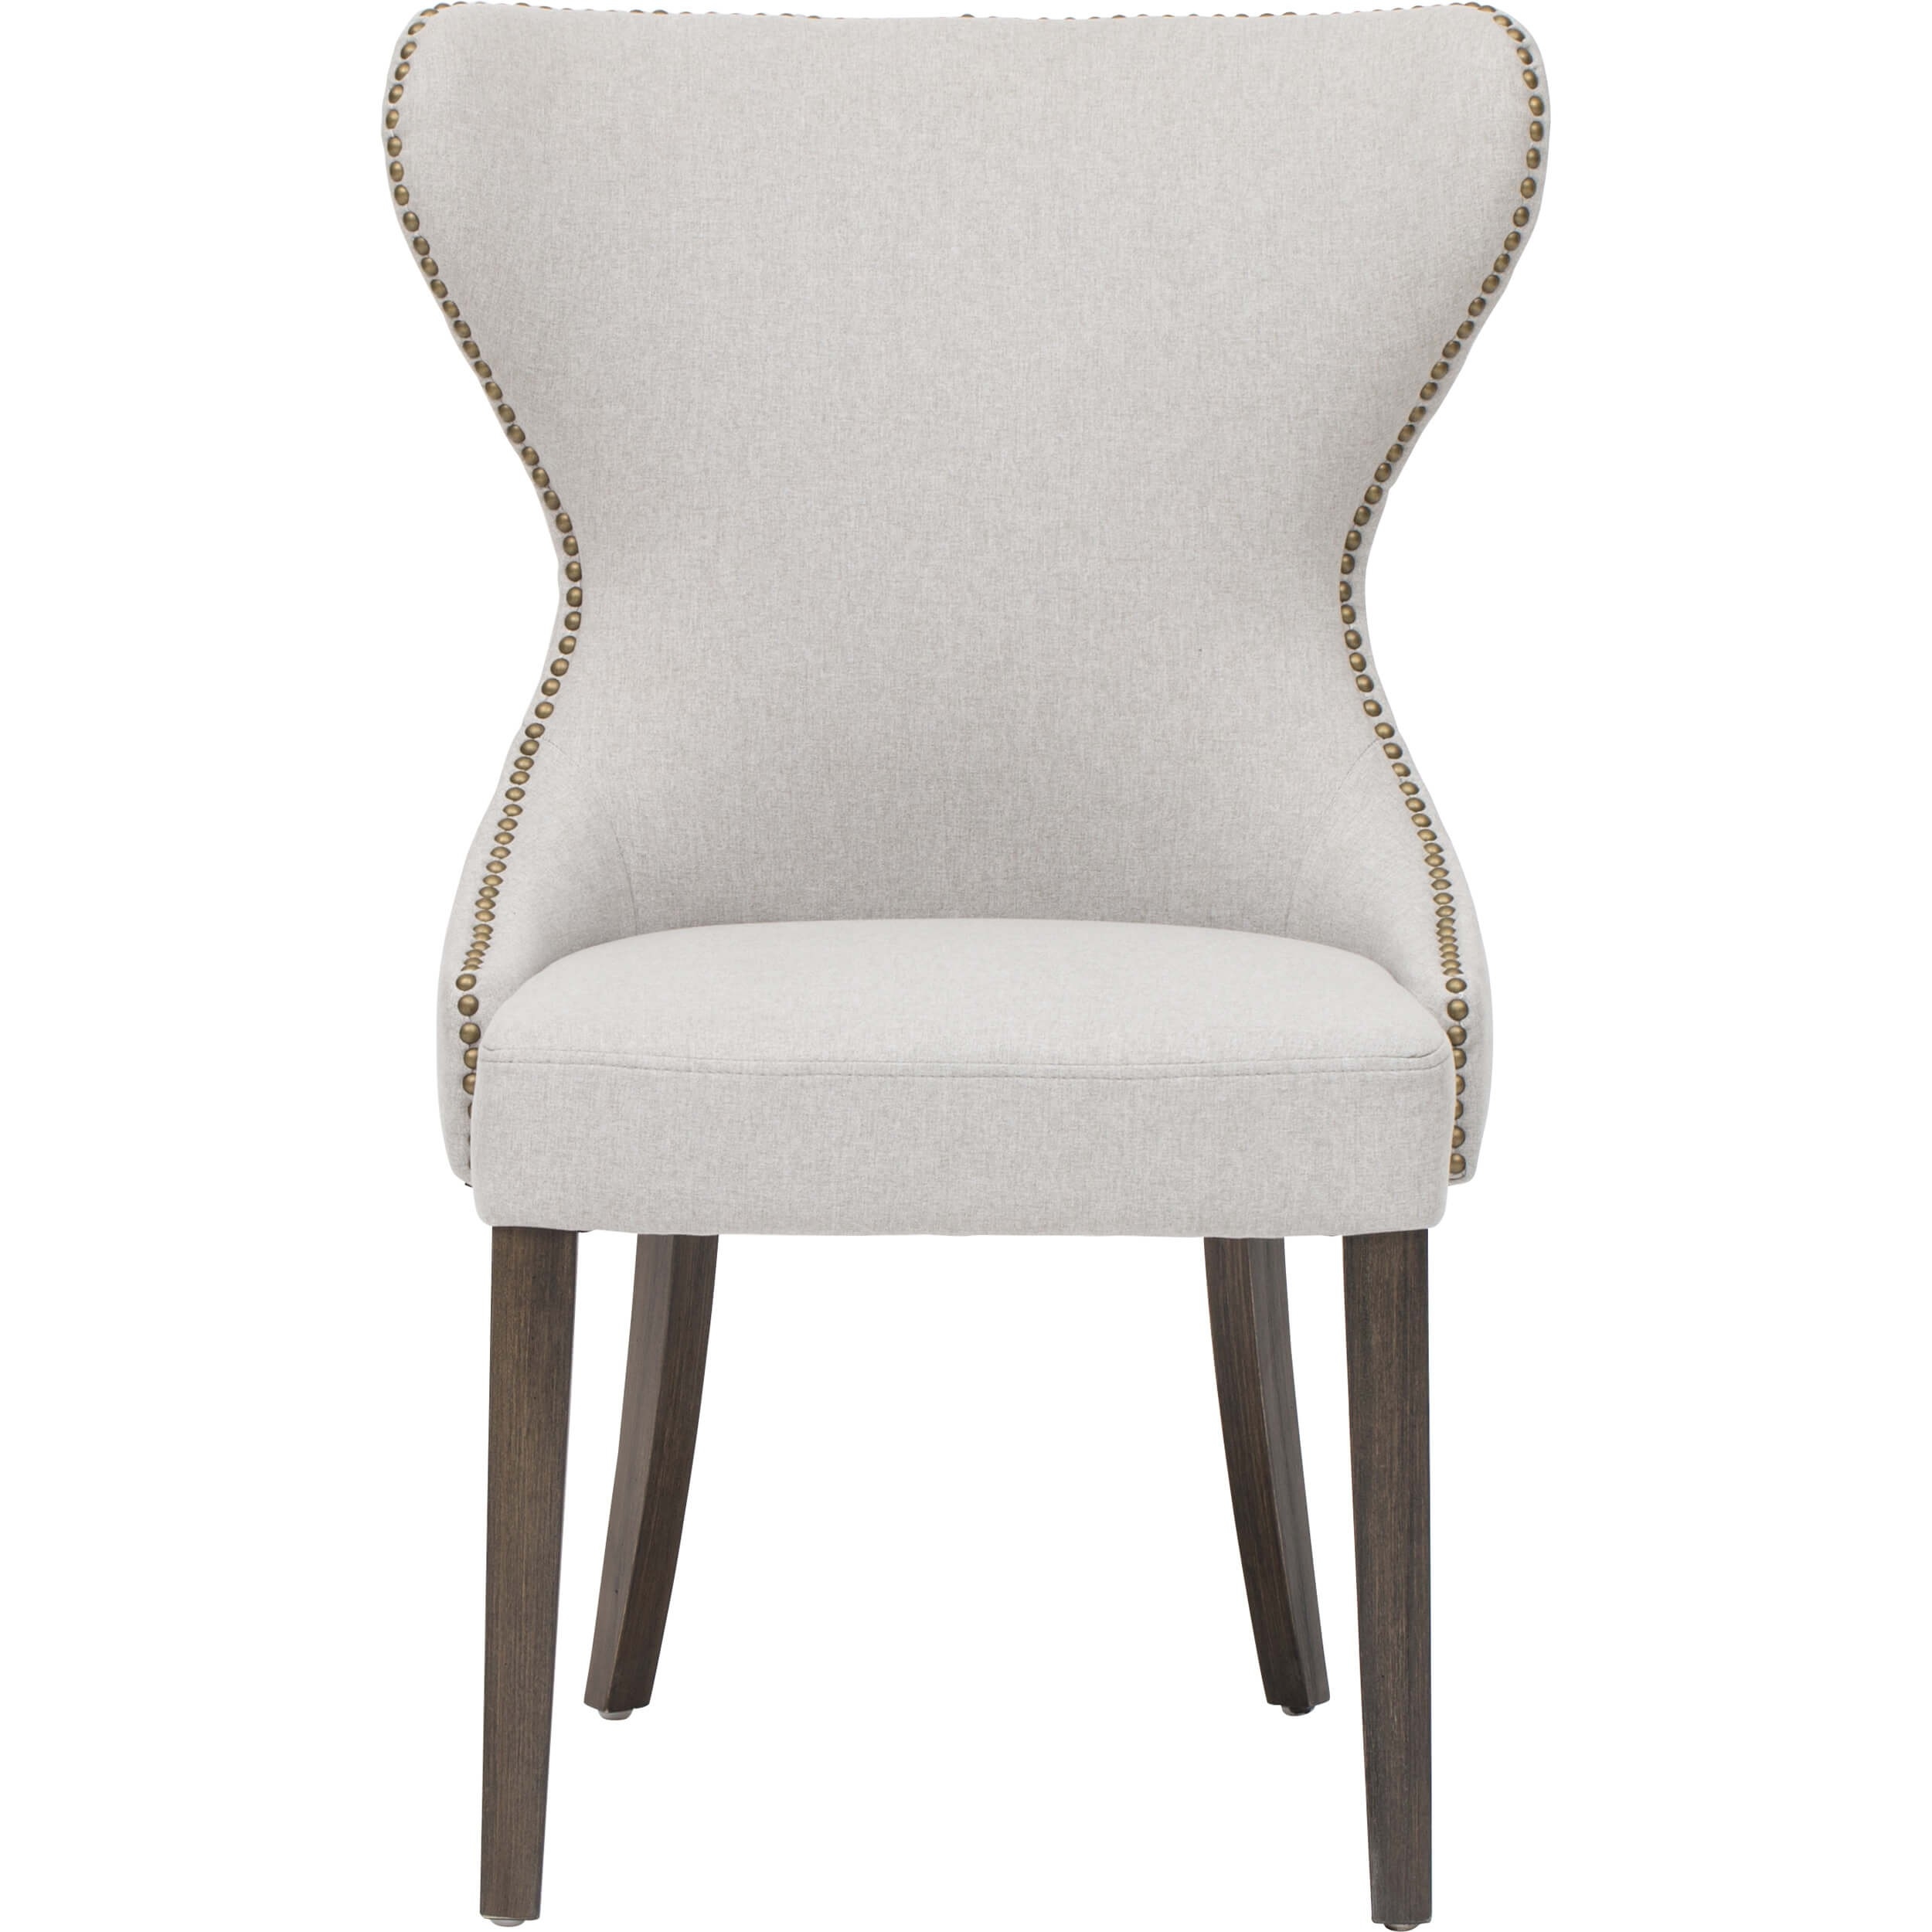 Ariana Dining Chair - Light Grey - Image 1